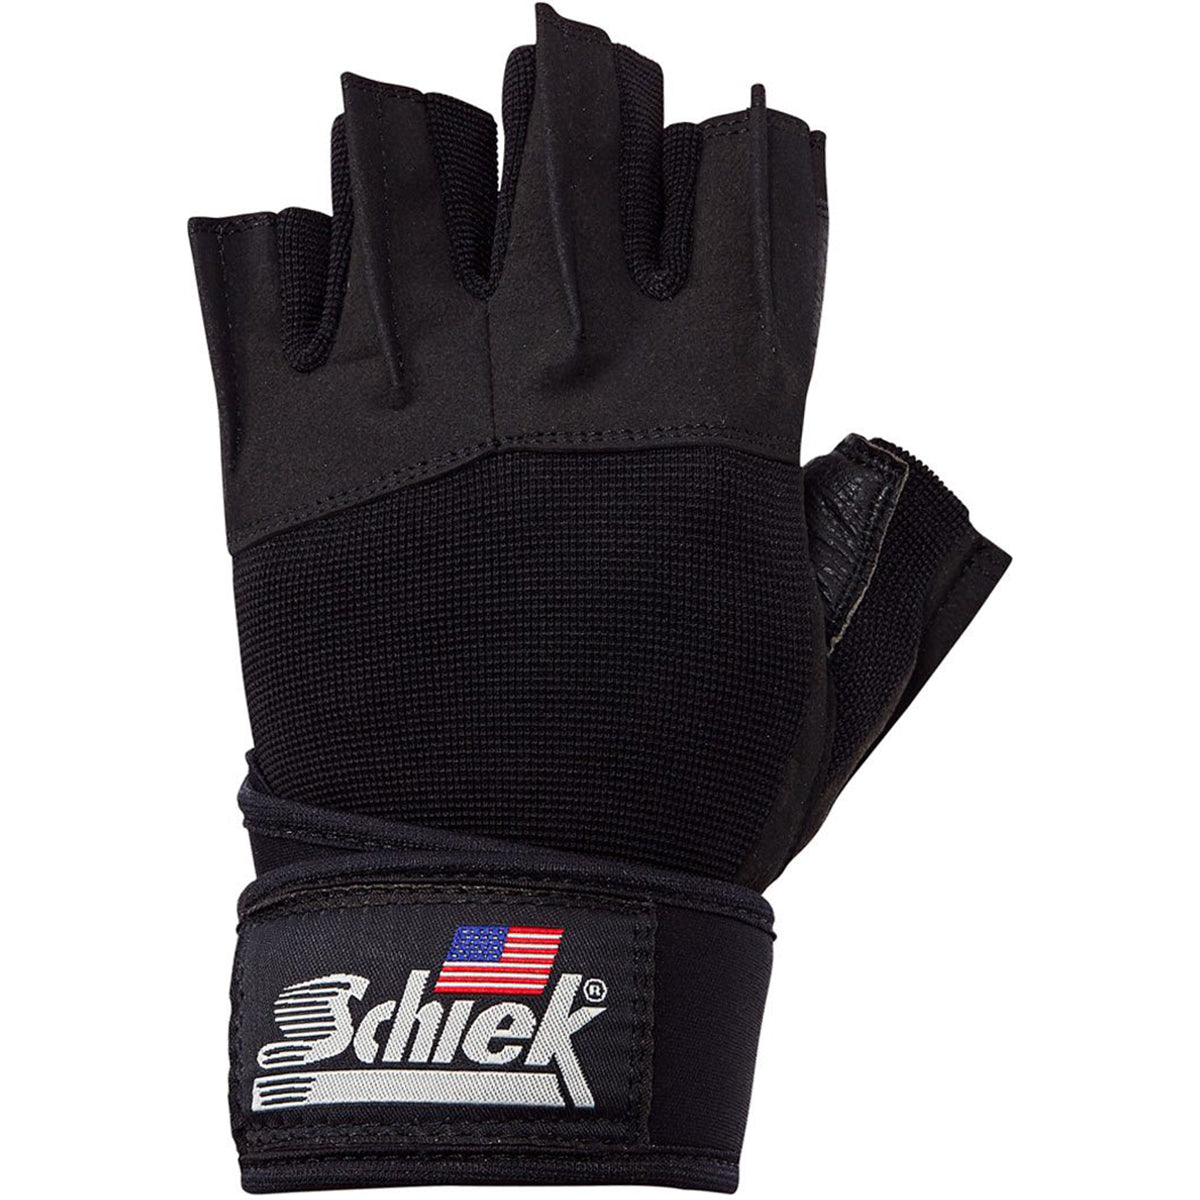 Schiek Sports Platinum 3/4 Finger Wrist Wrap Lifting Gloves - Black/Gray Schiek Sports